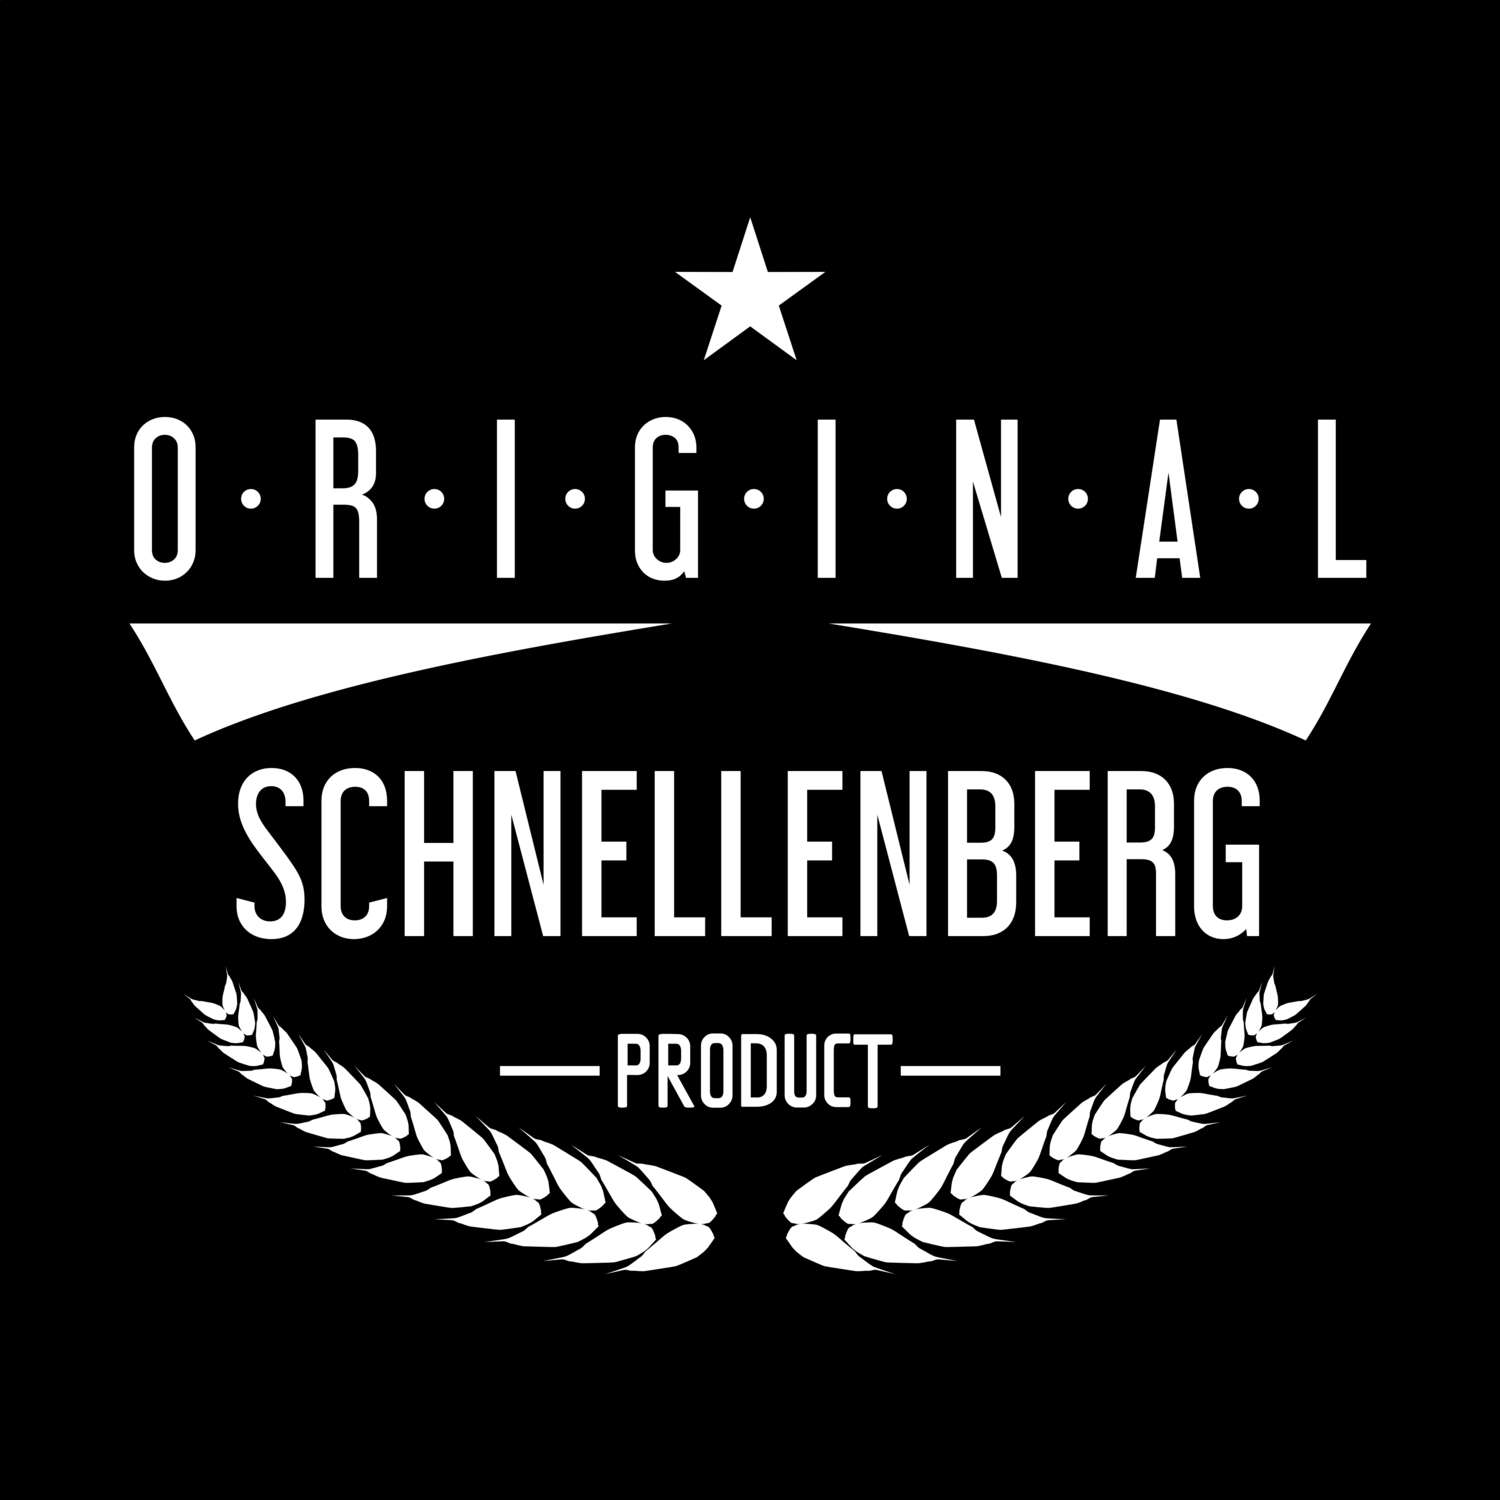 Schnellenberg T-Shirt »Original Product«